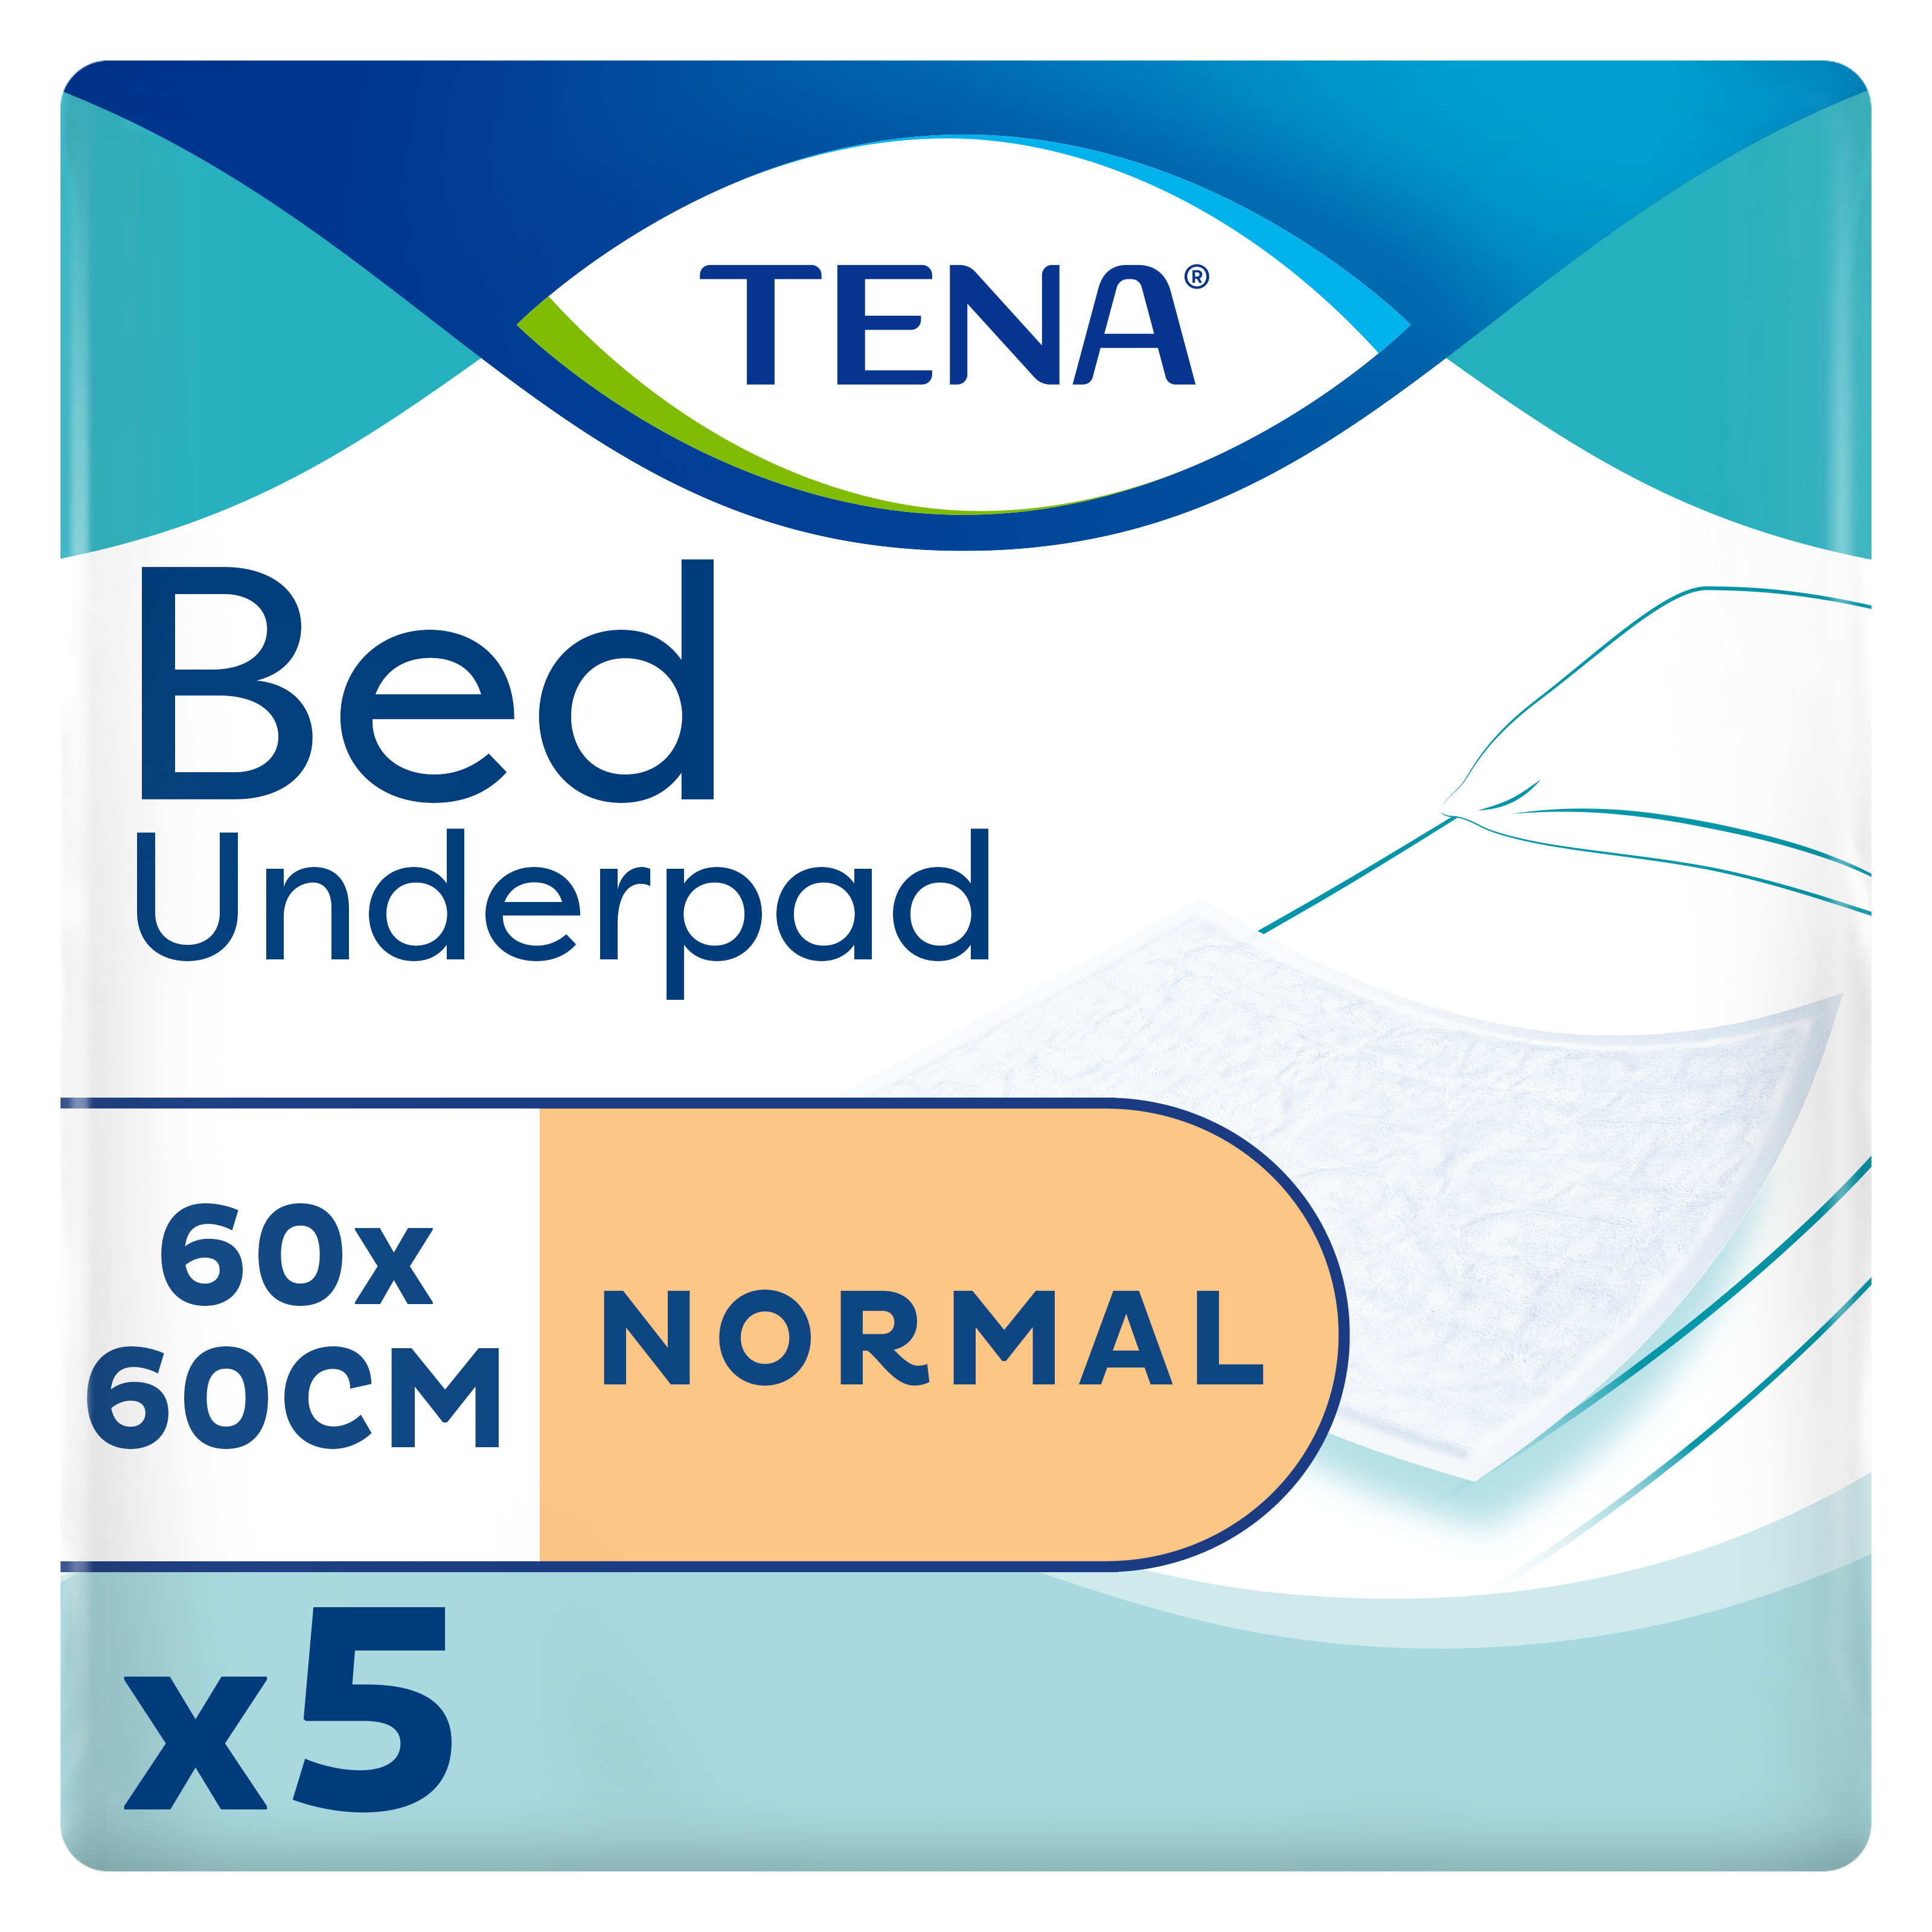 Aleze / Protecții pentru pat TENA Bed Normal, dimensiune 60x60, 5 buc.